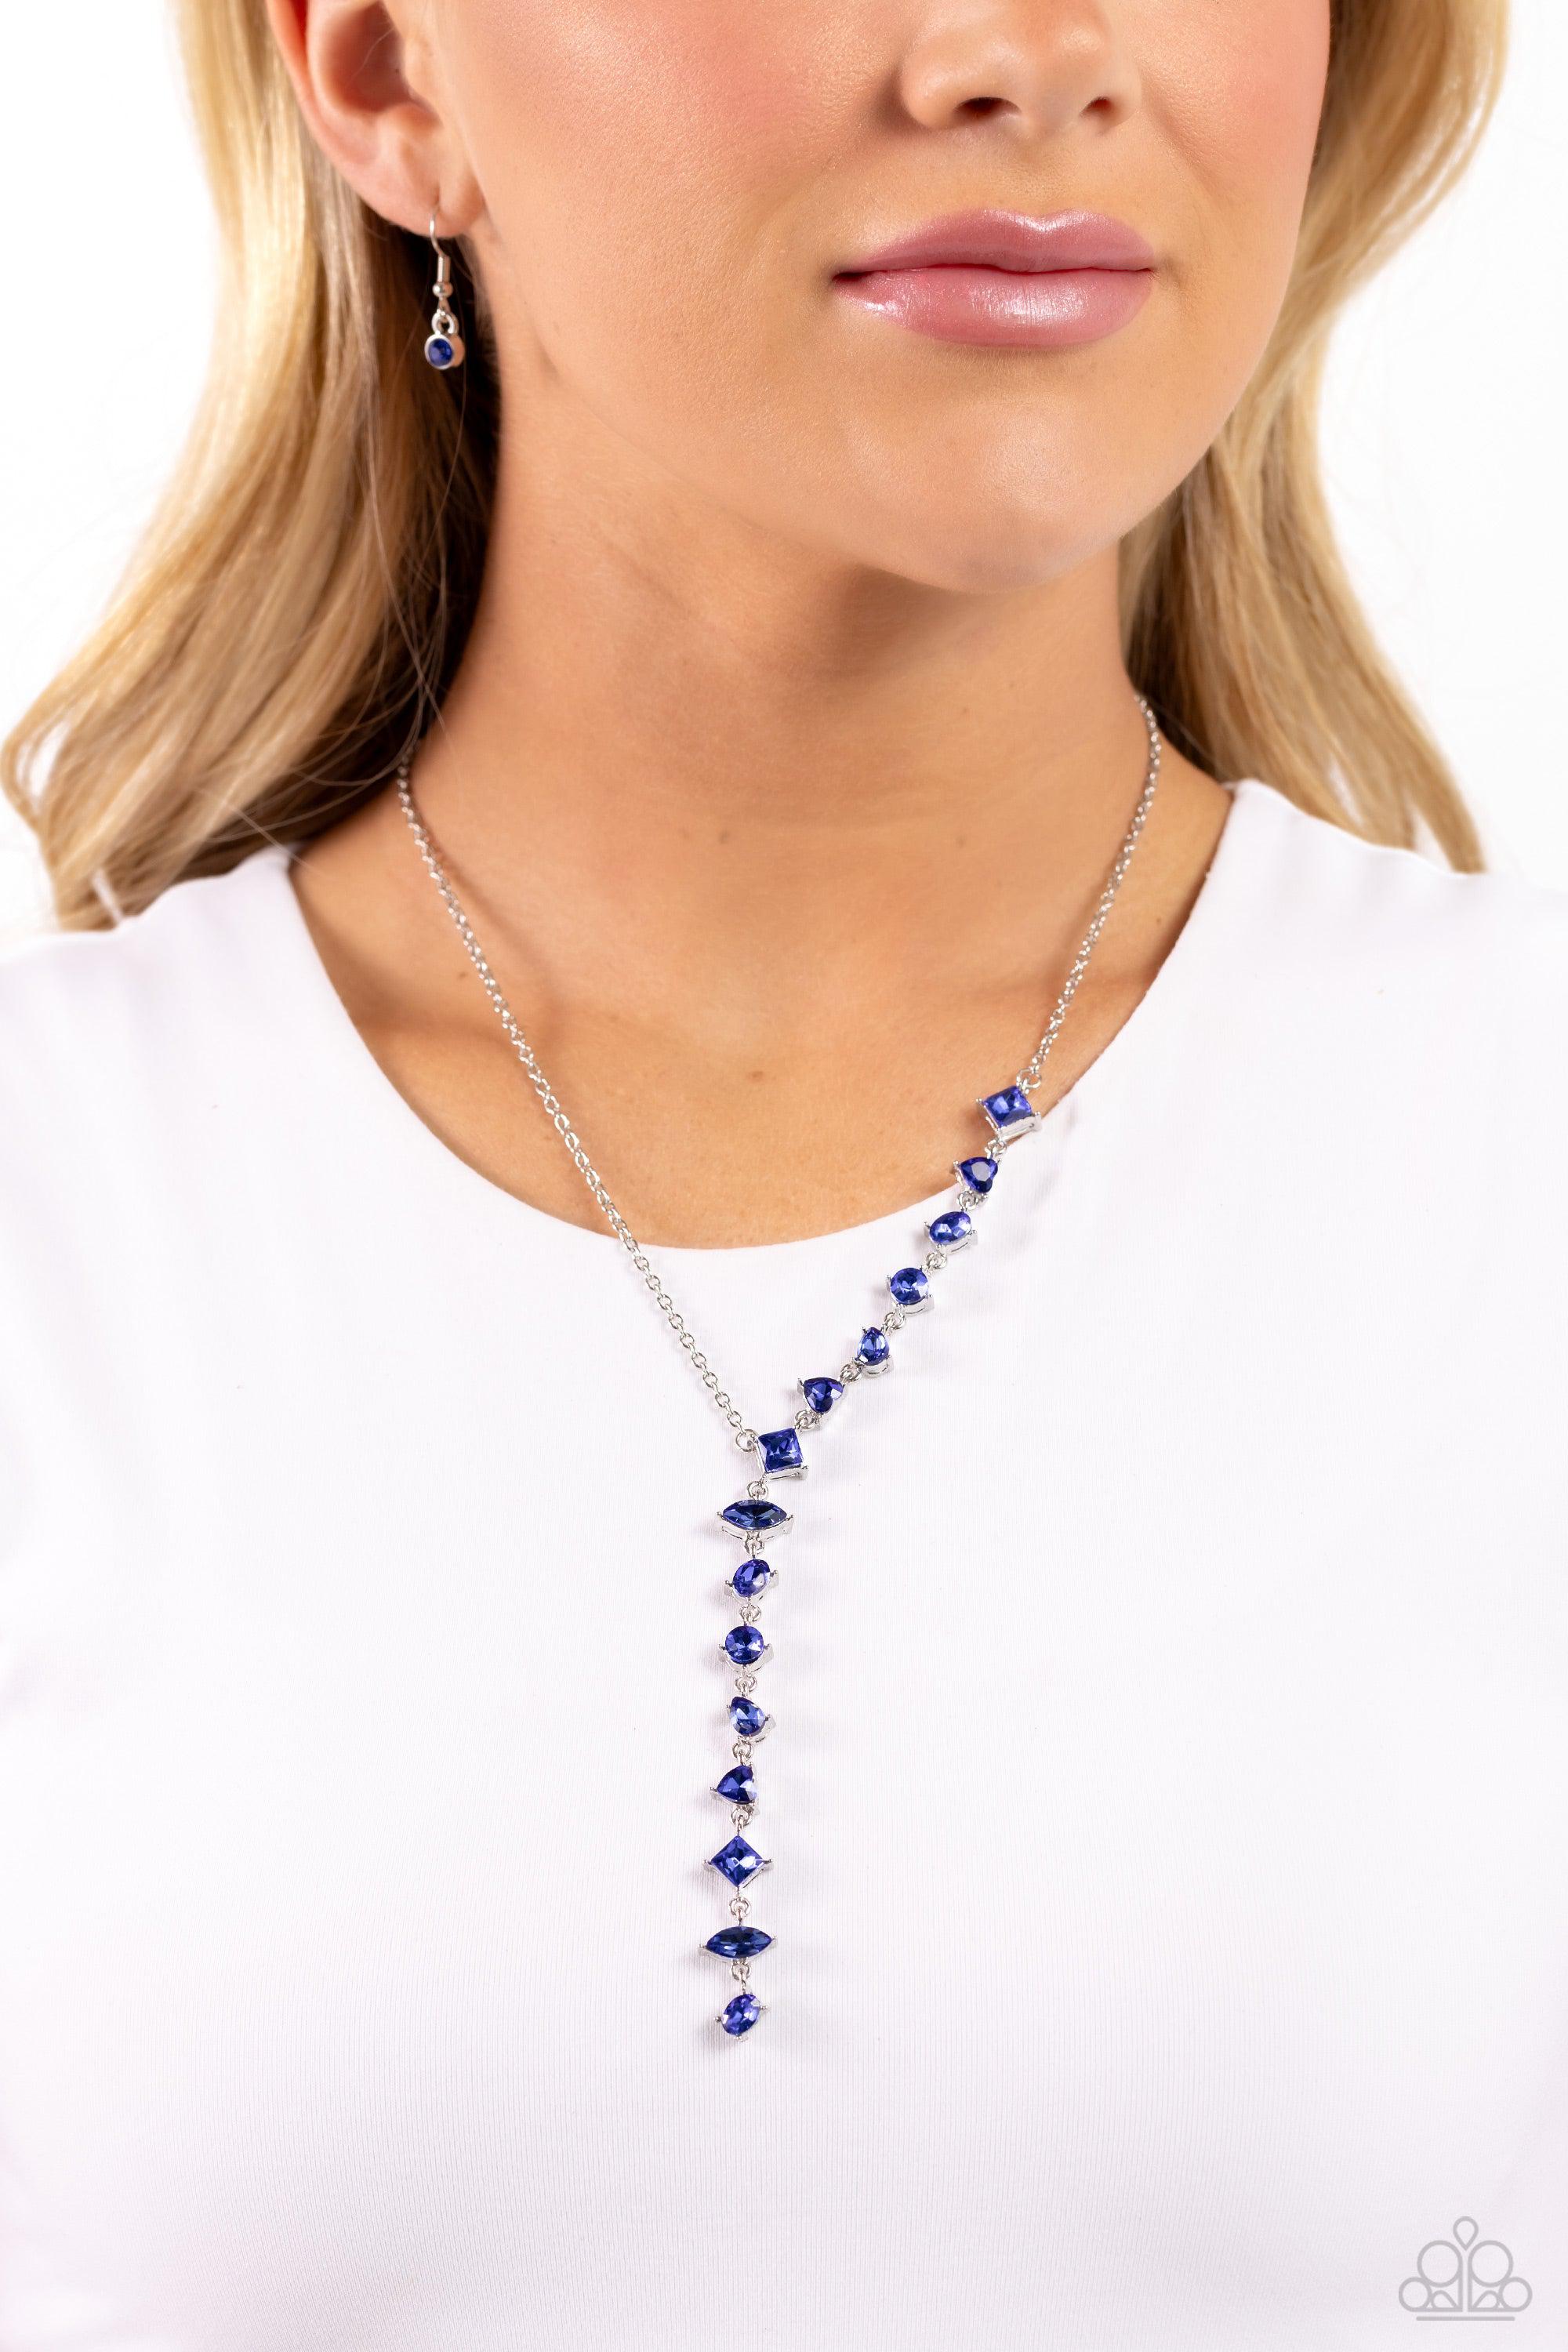 Diagonal Daydream Blue Rhinestone Necklace - Paparazzi Accessories- lightbox - CarasShop.com - $5 Jewelry by Cara Jewels